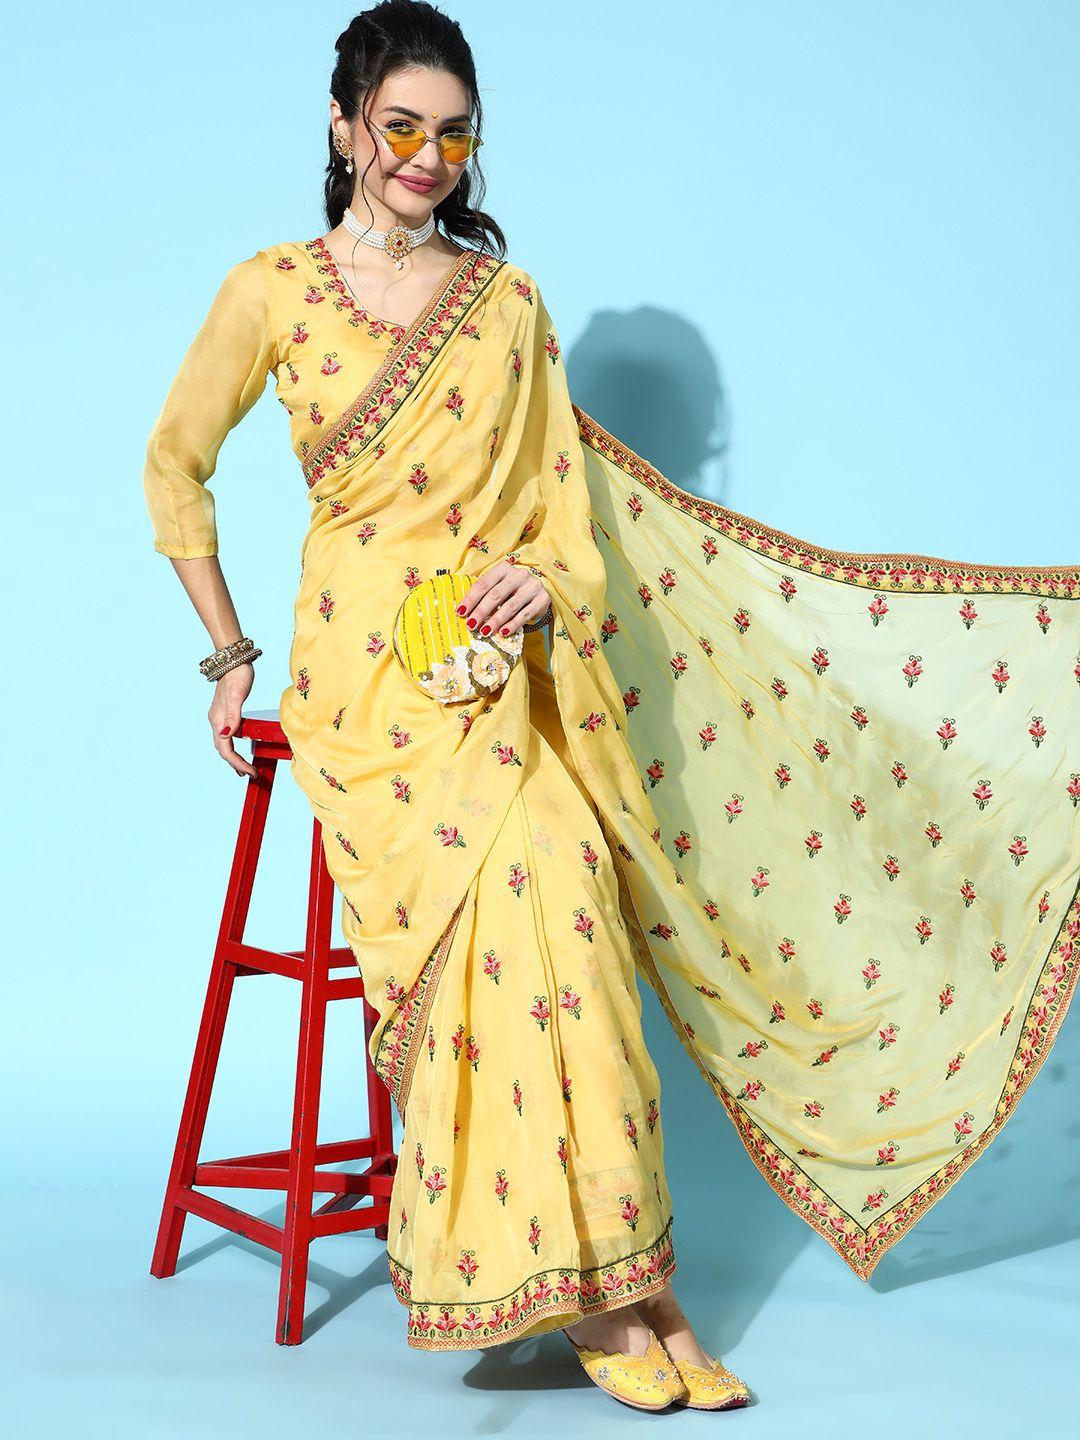 redround yellow saree